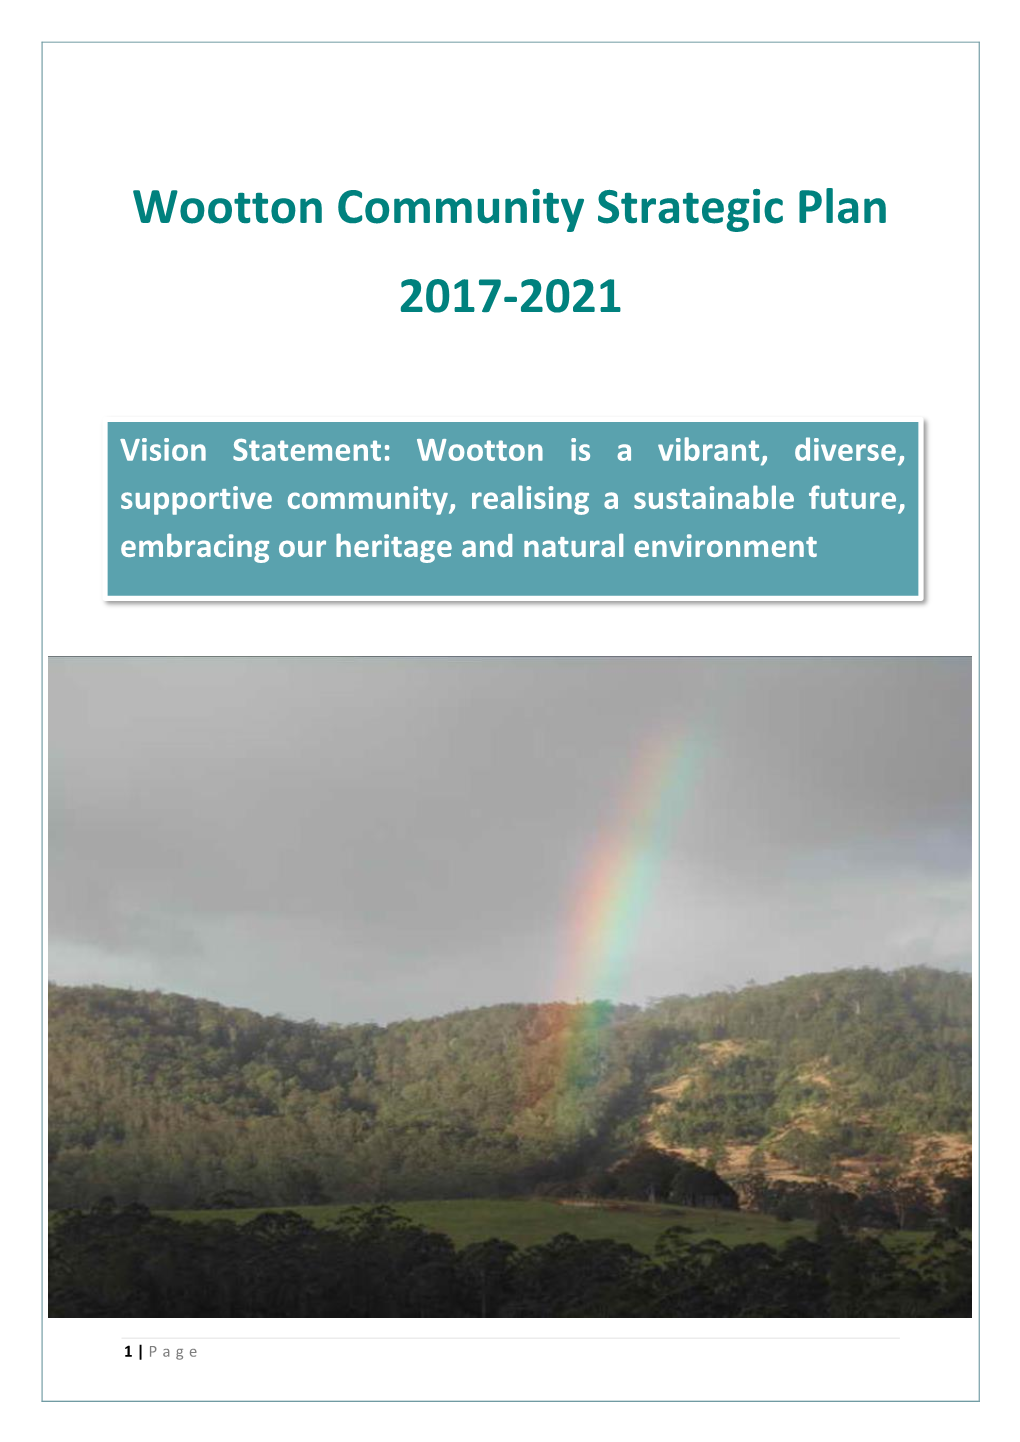 Wootton Community Strategic Plan 2017-2021